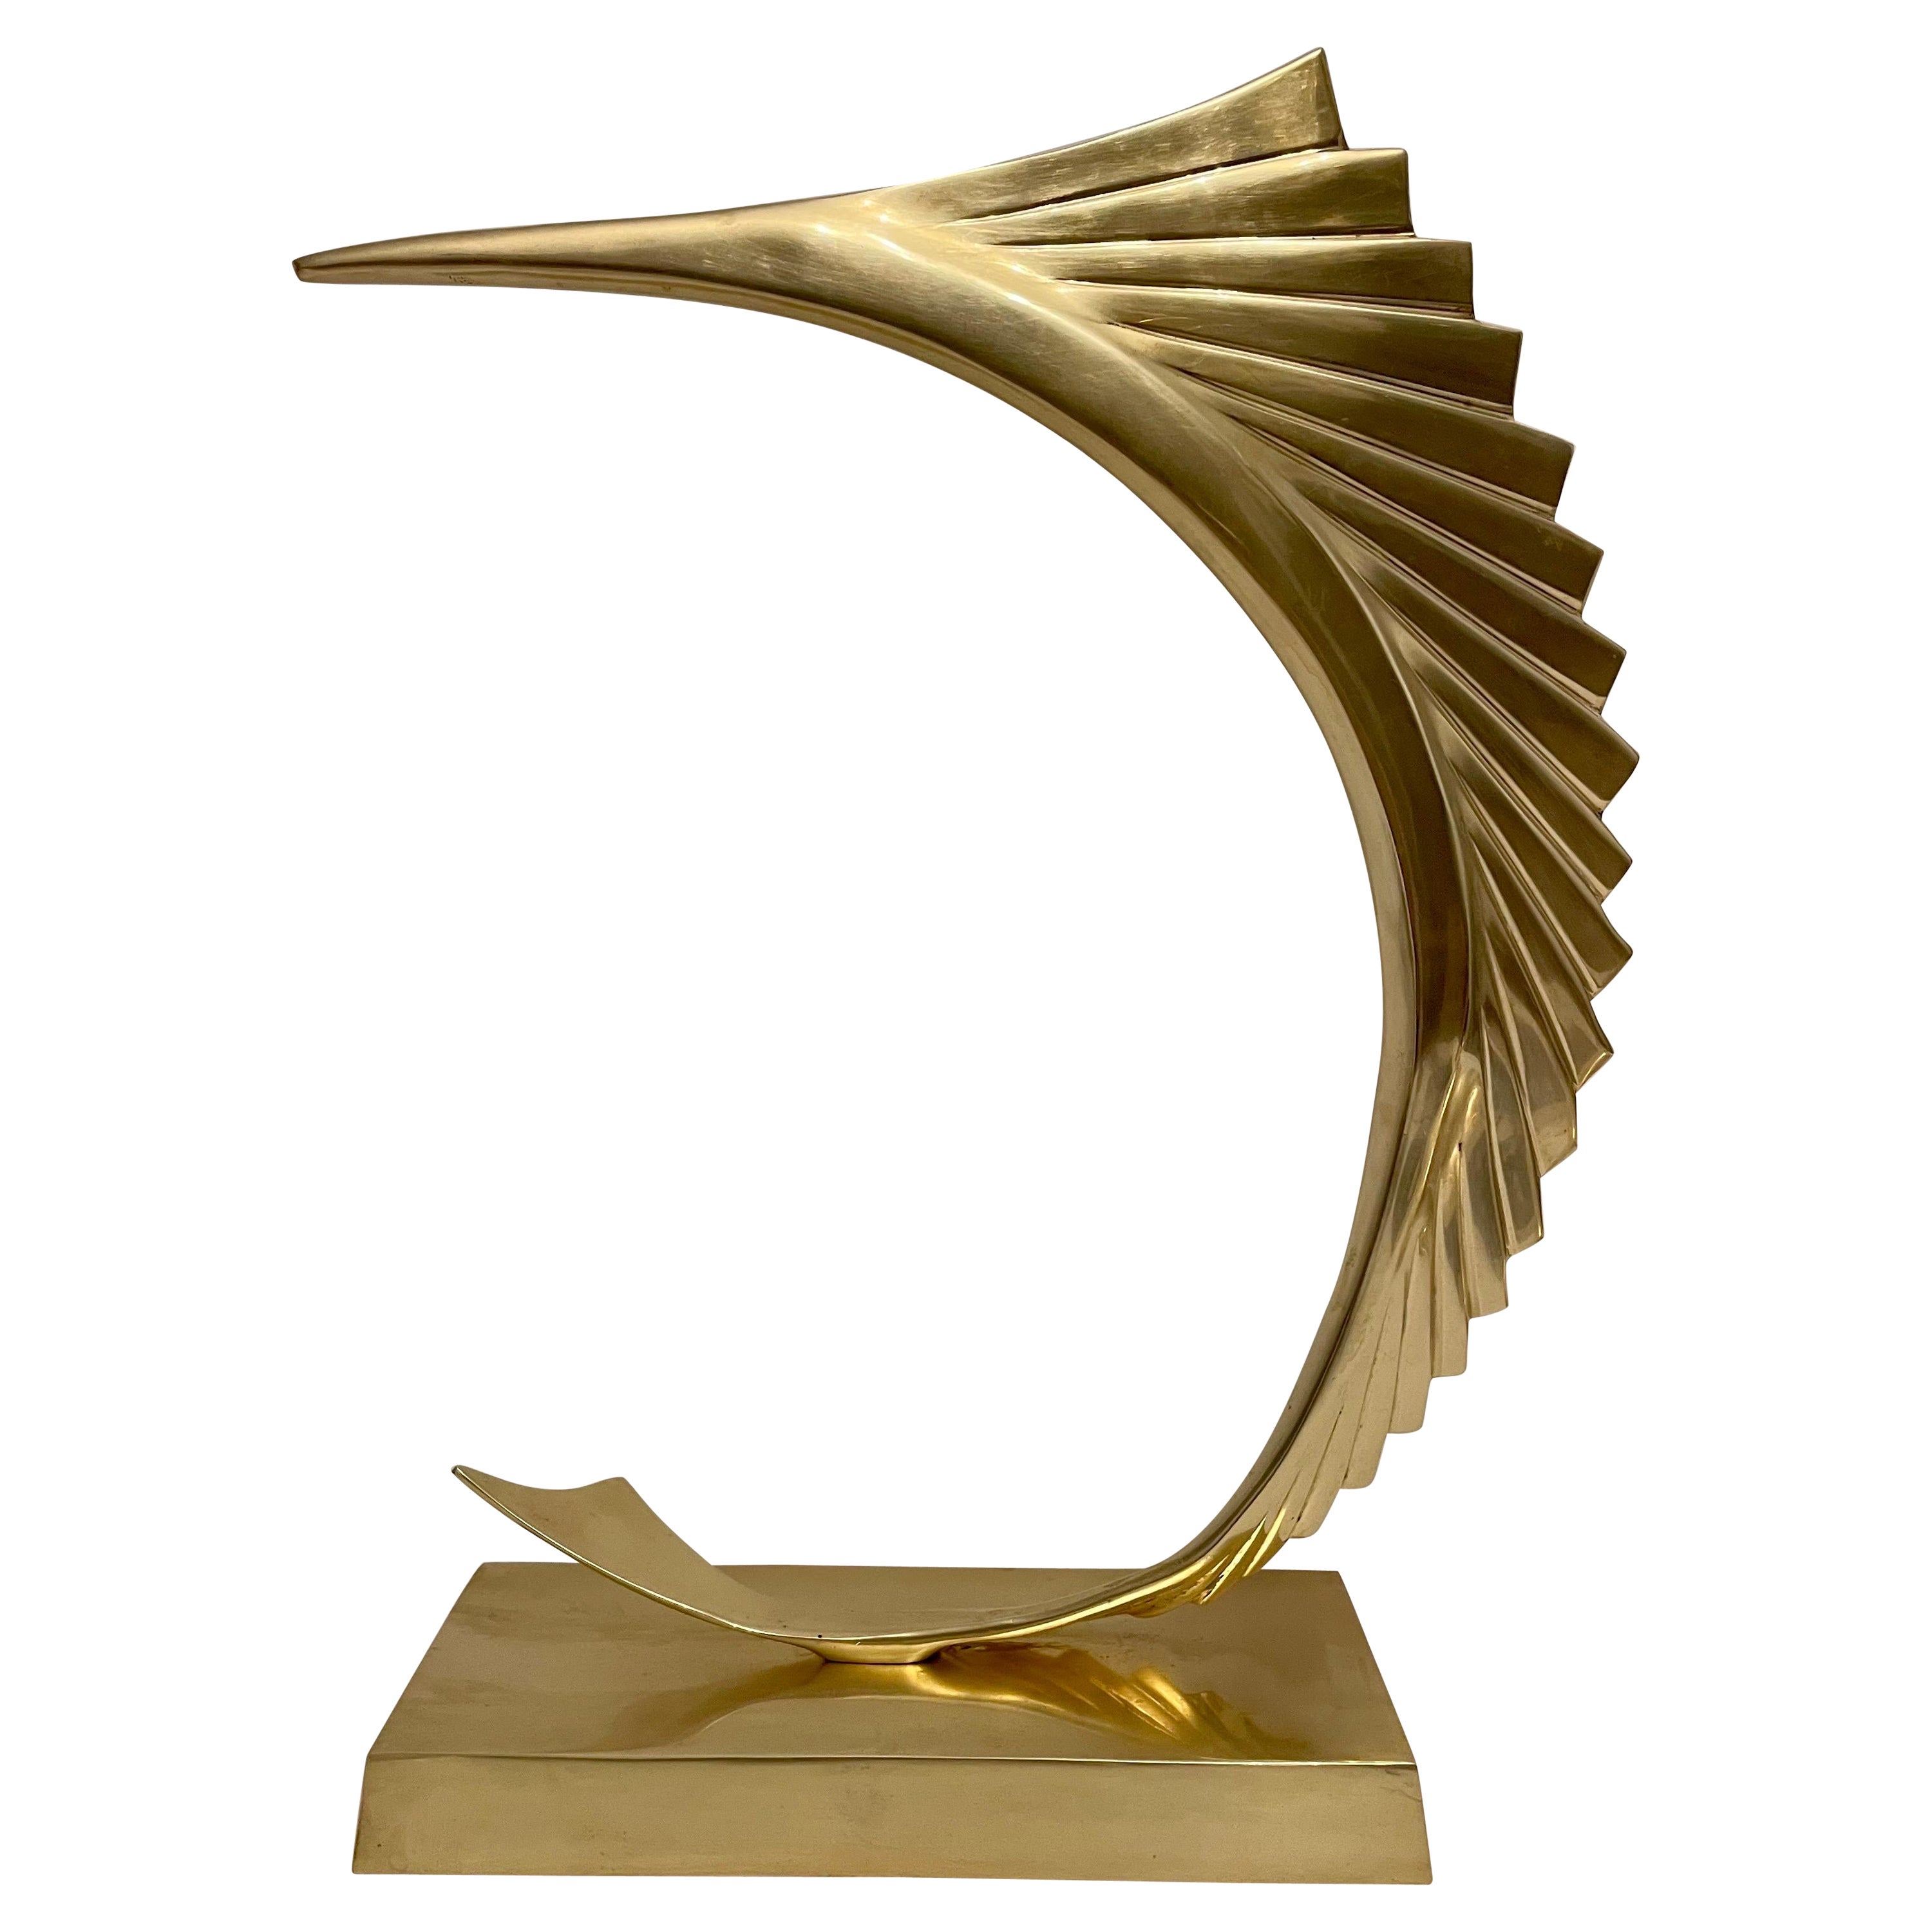 Brass Marlin Sailfish Sculpture For Sale